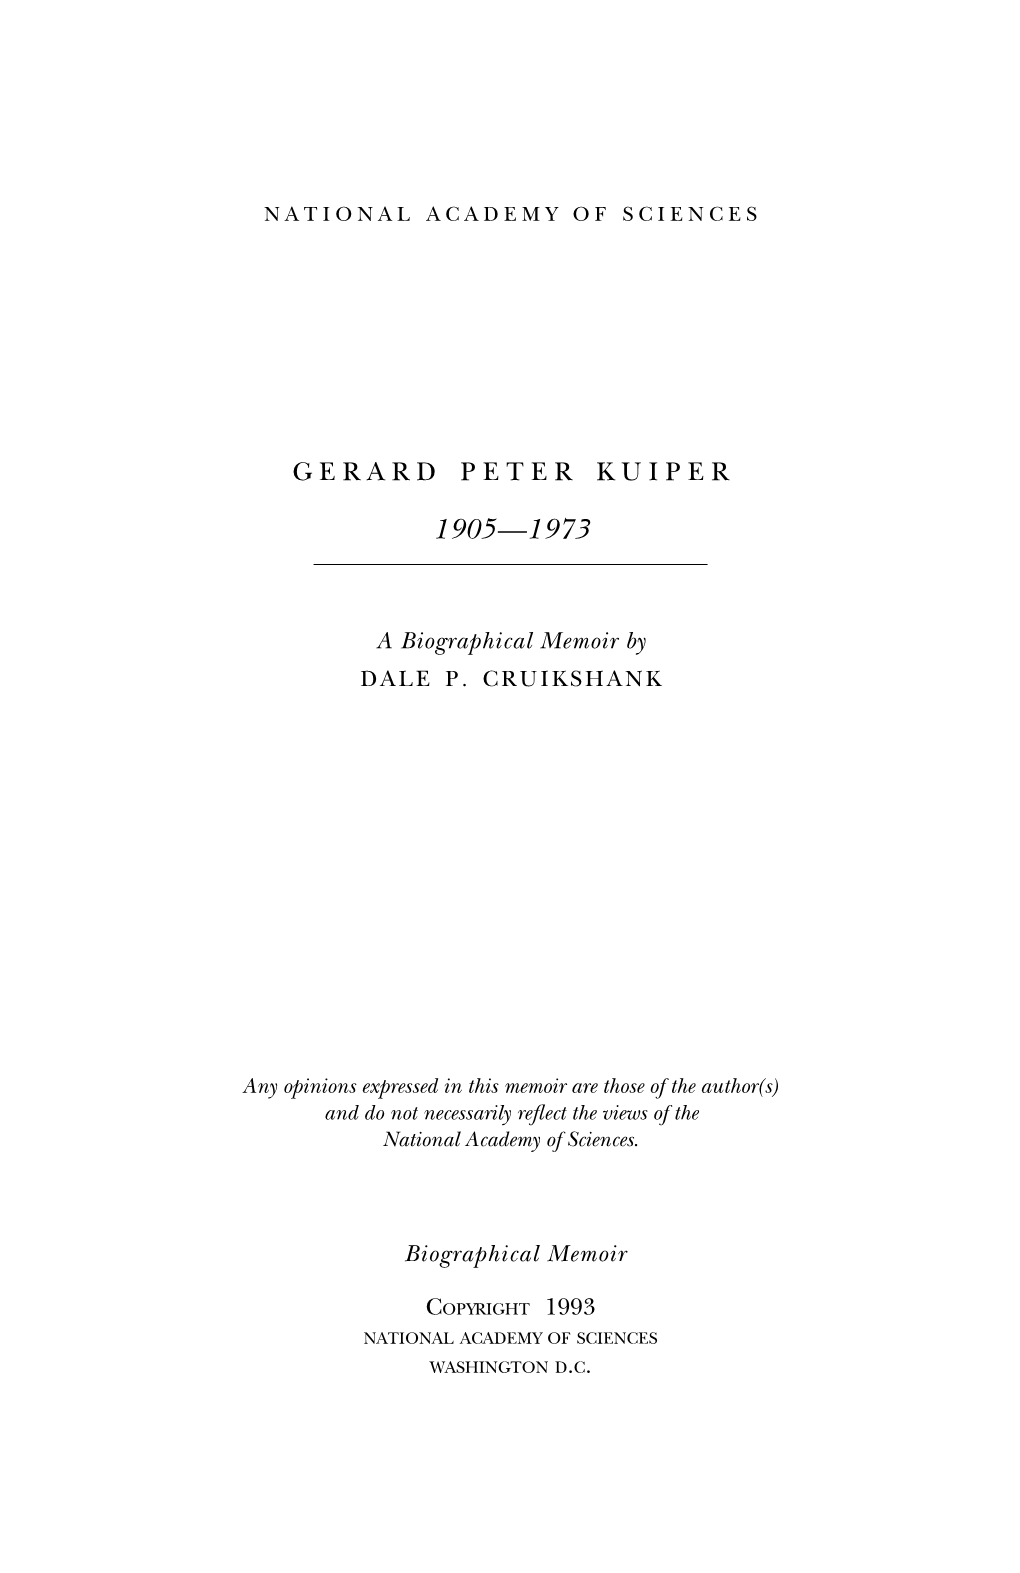 Gerard Peter Kuiper